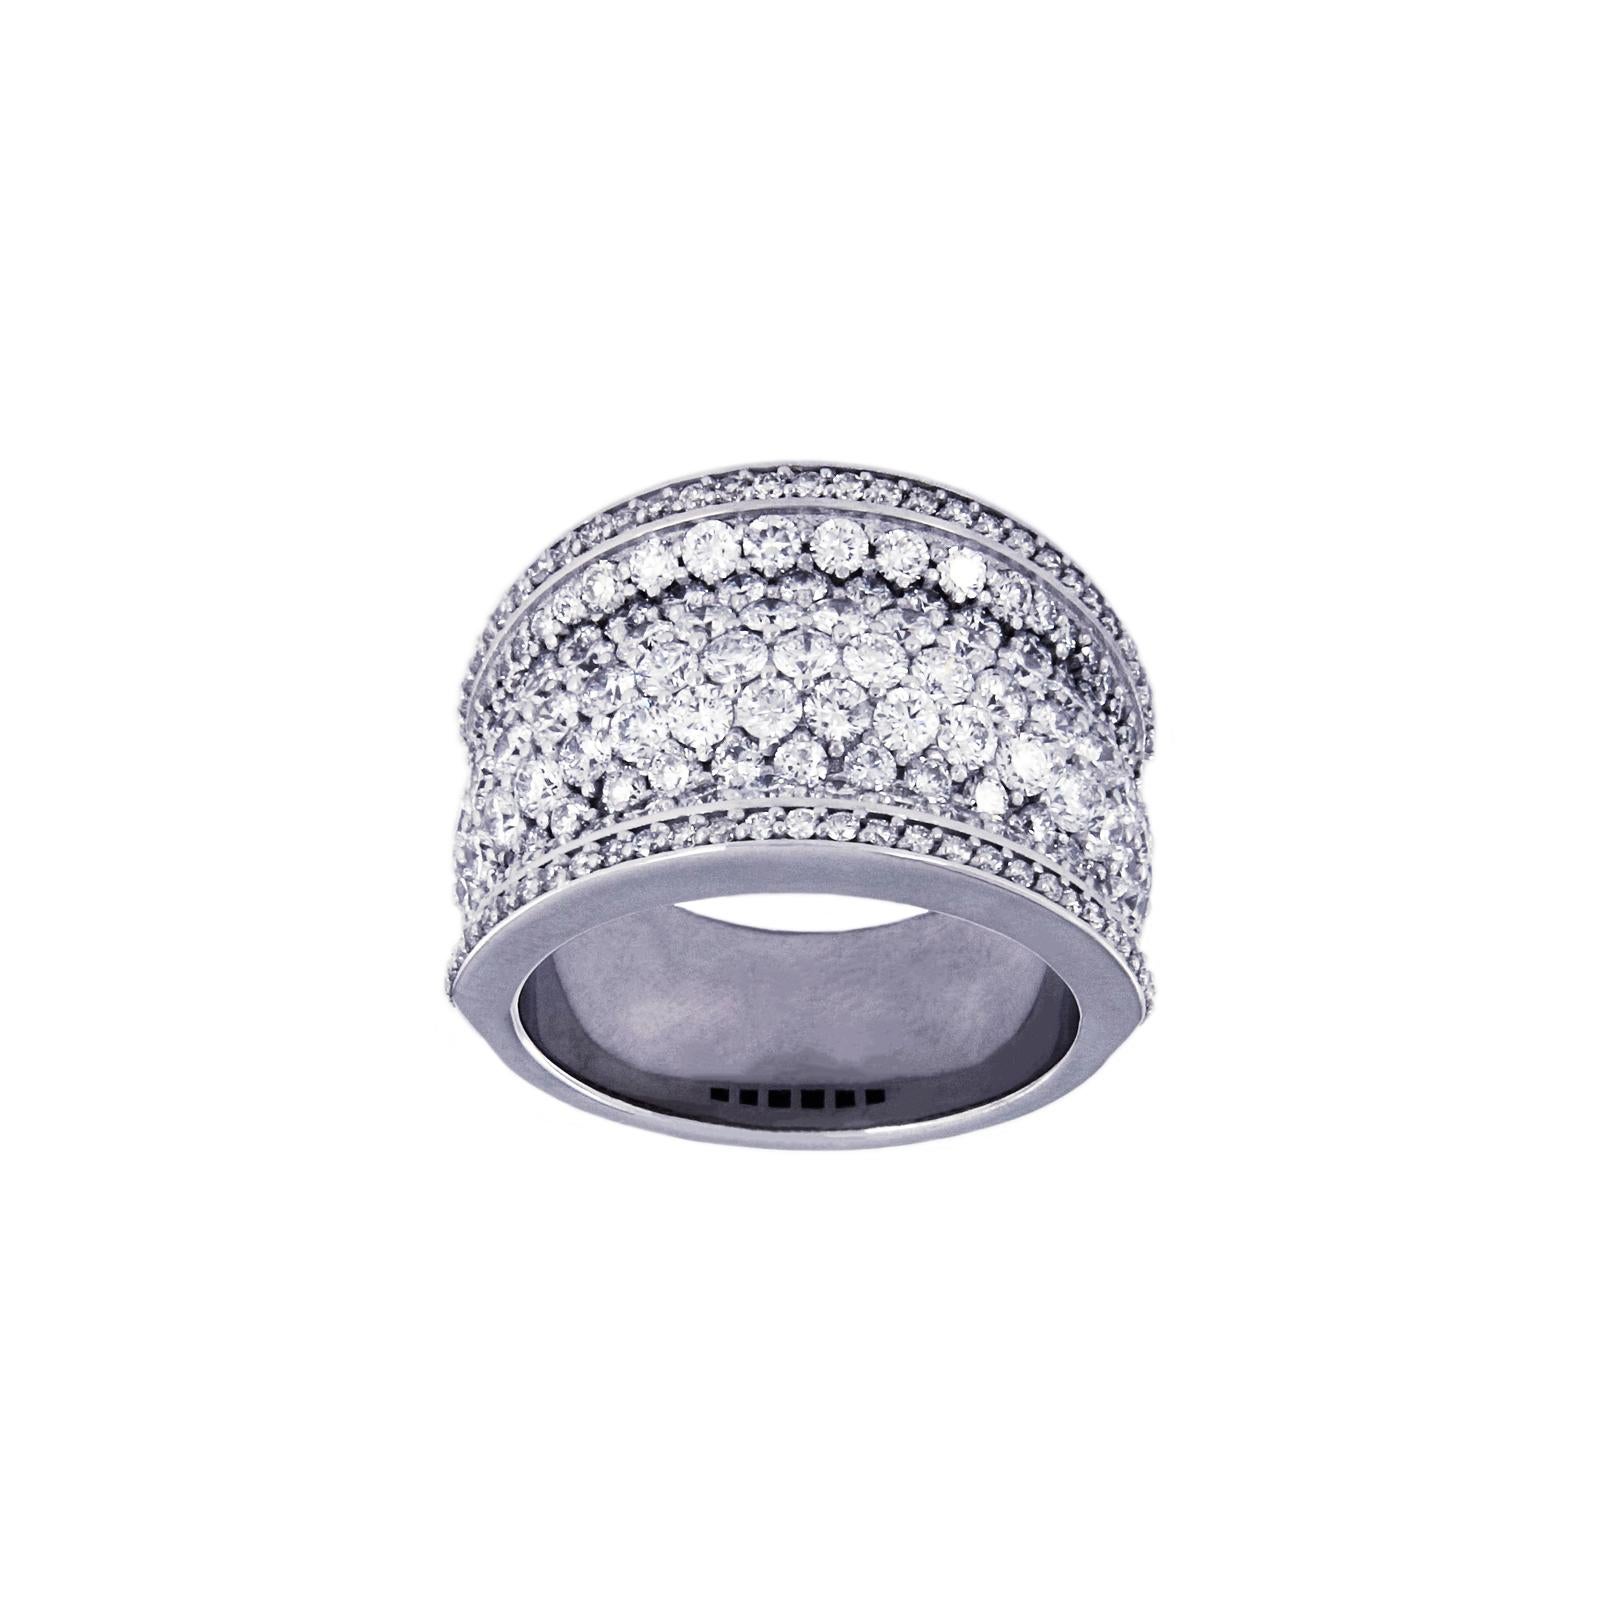 Men's Grand 5.5ct Diamond Ring in 14k White Gold For Sale